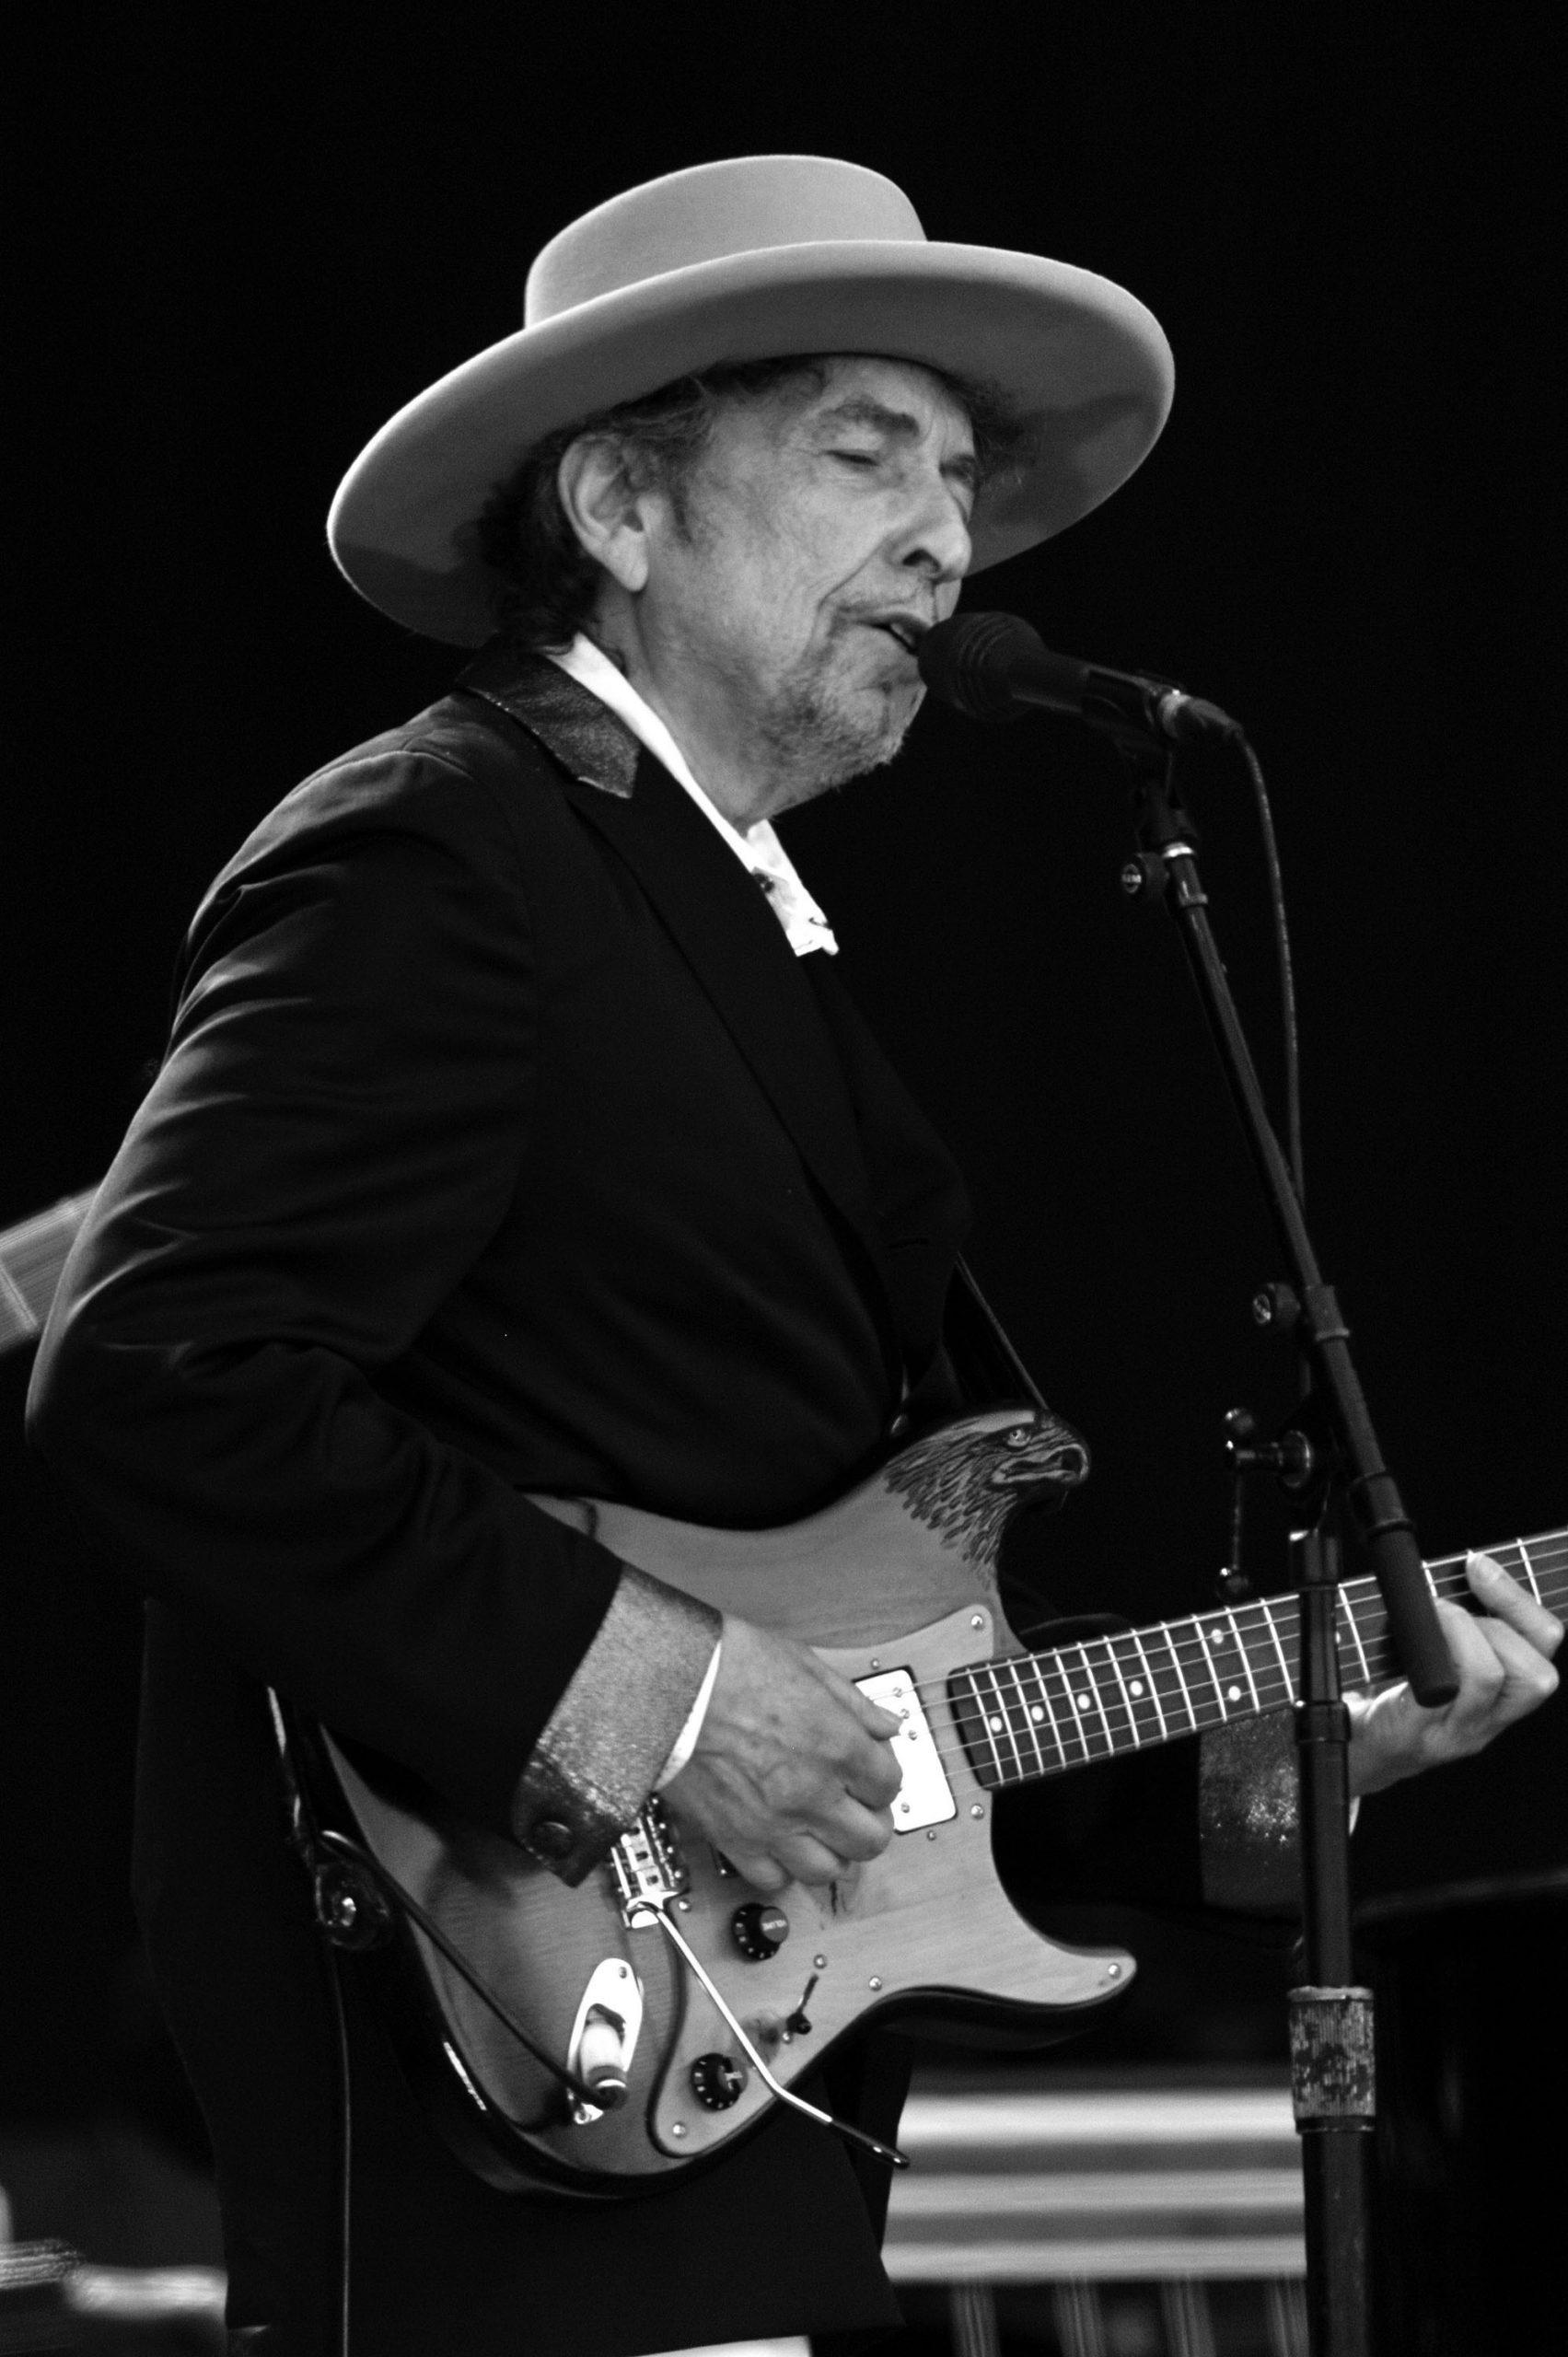 Bob Dylan awarded the Nobel Prize in Literature